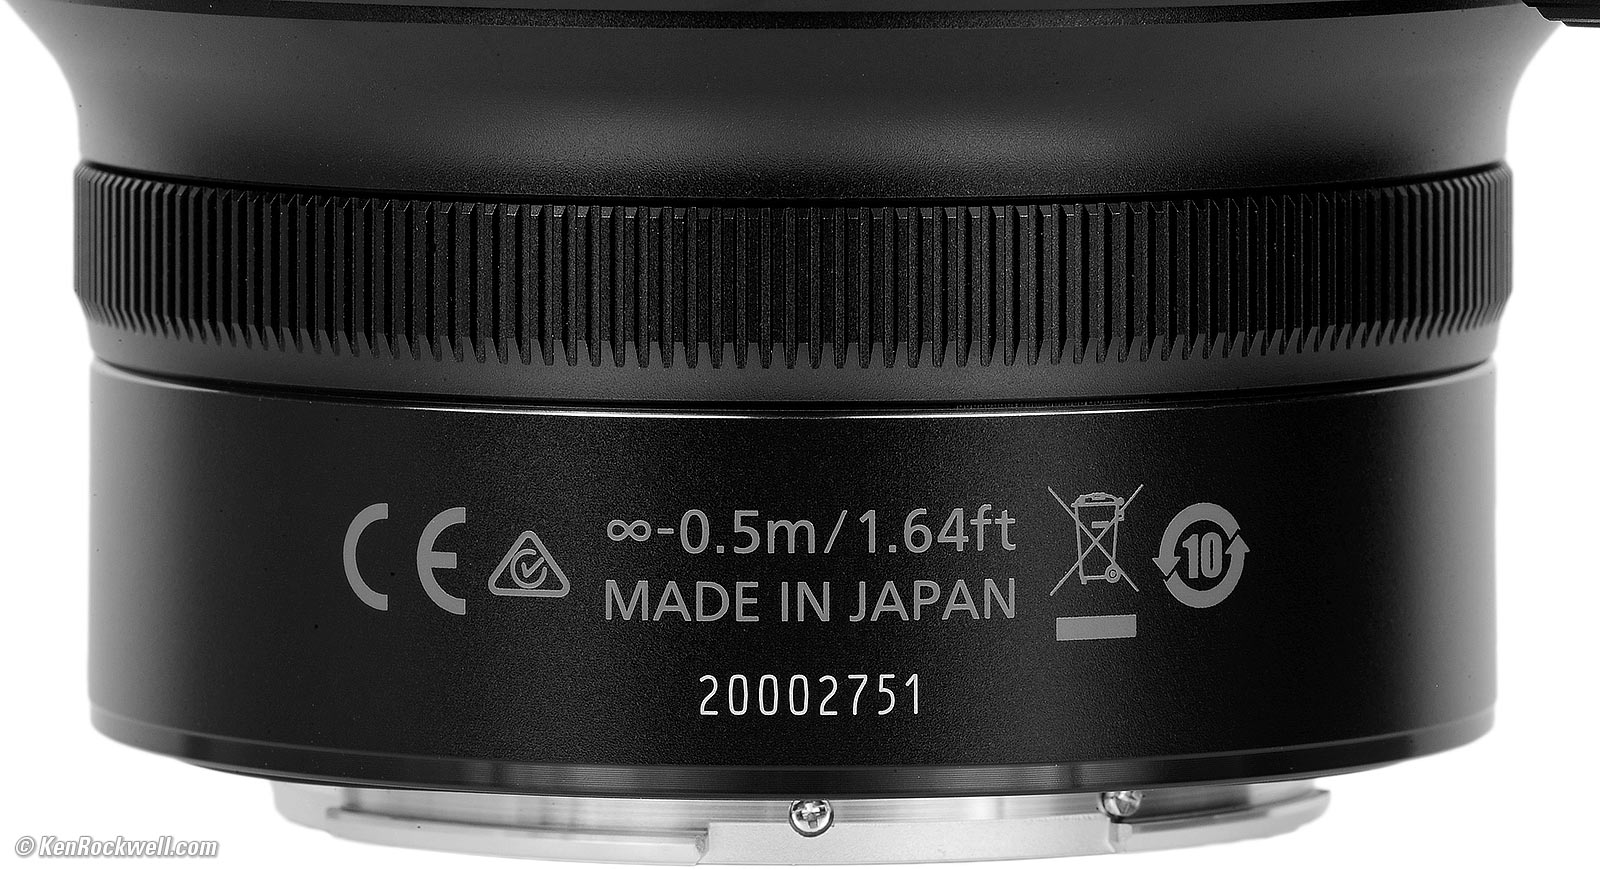 Nikon Zf Camera and Nikon Z 58mm F0.95 S Noct Lens